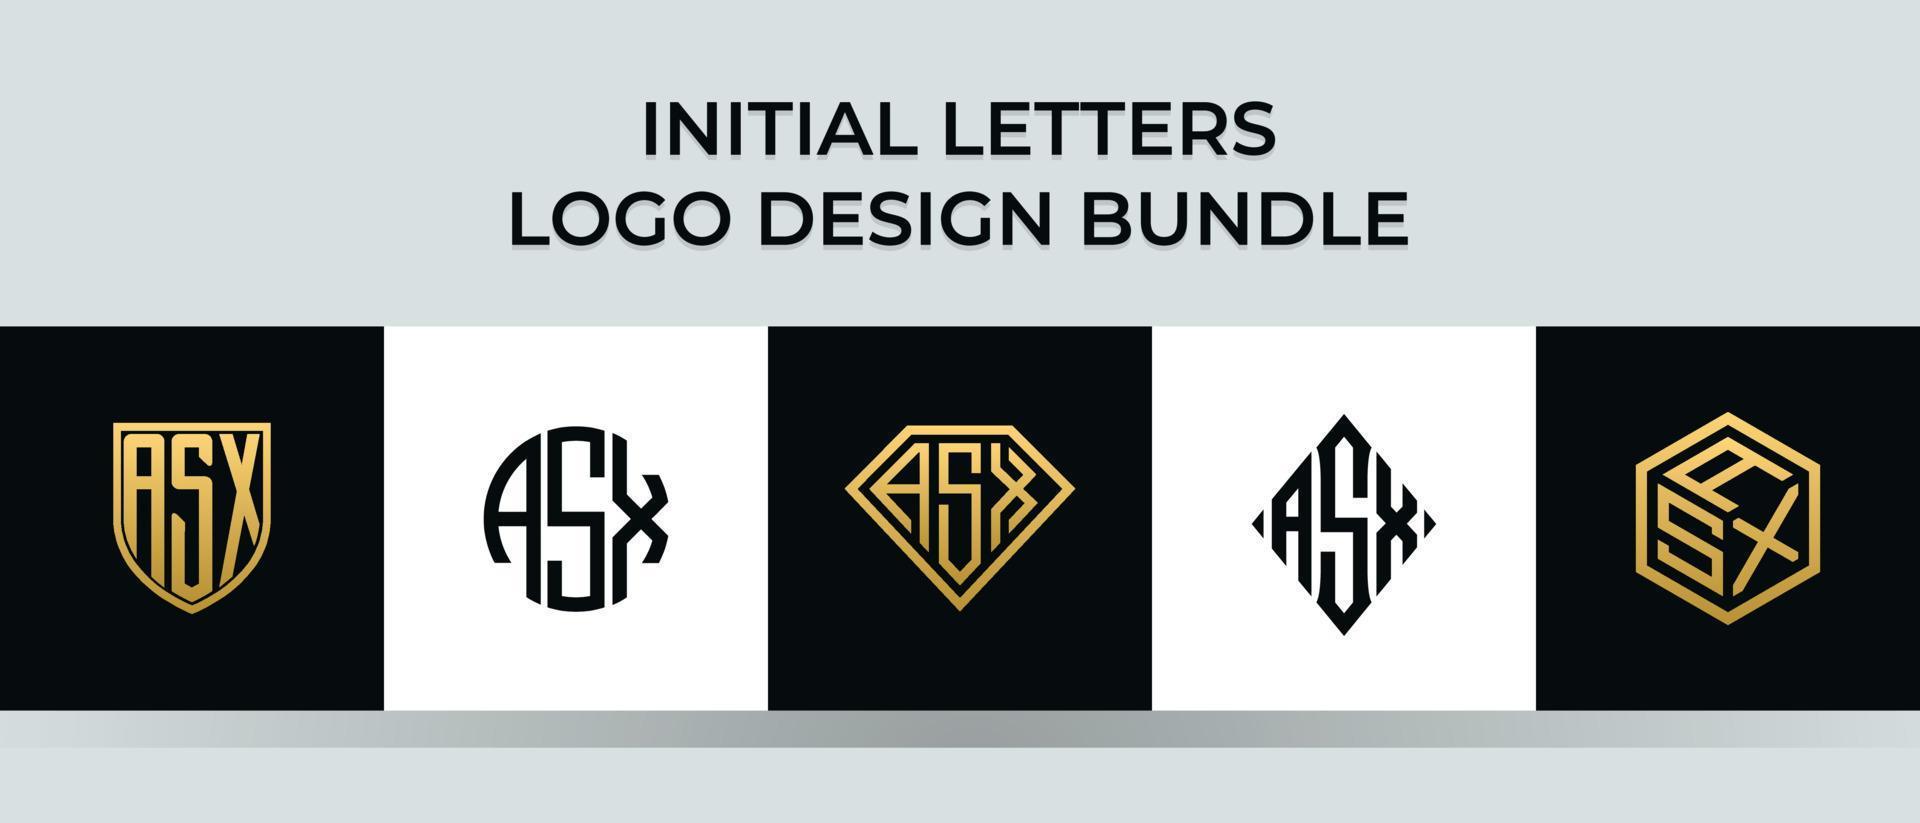 Anfangsbuchstaben asx Logo Designs Bundle vektor